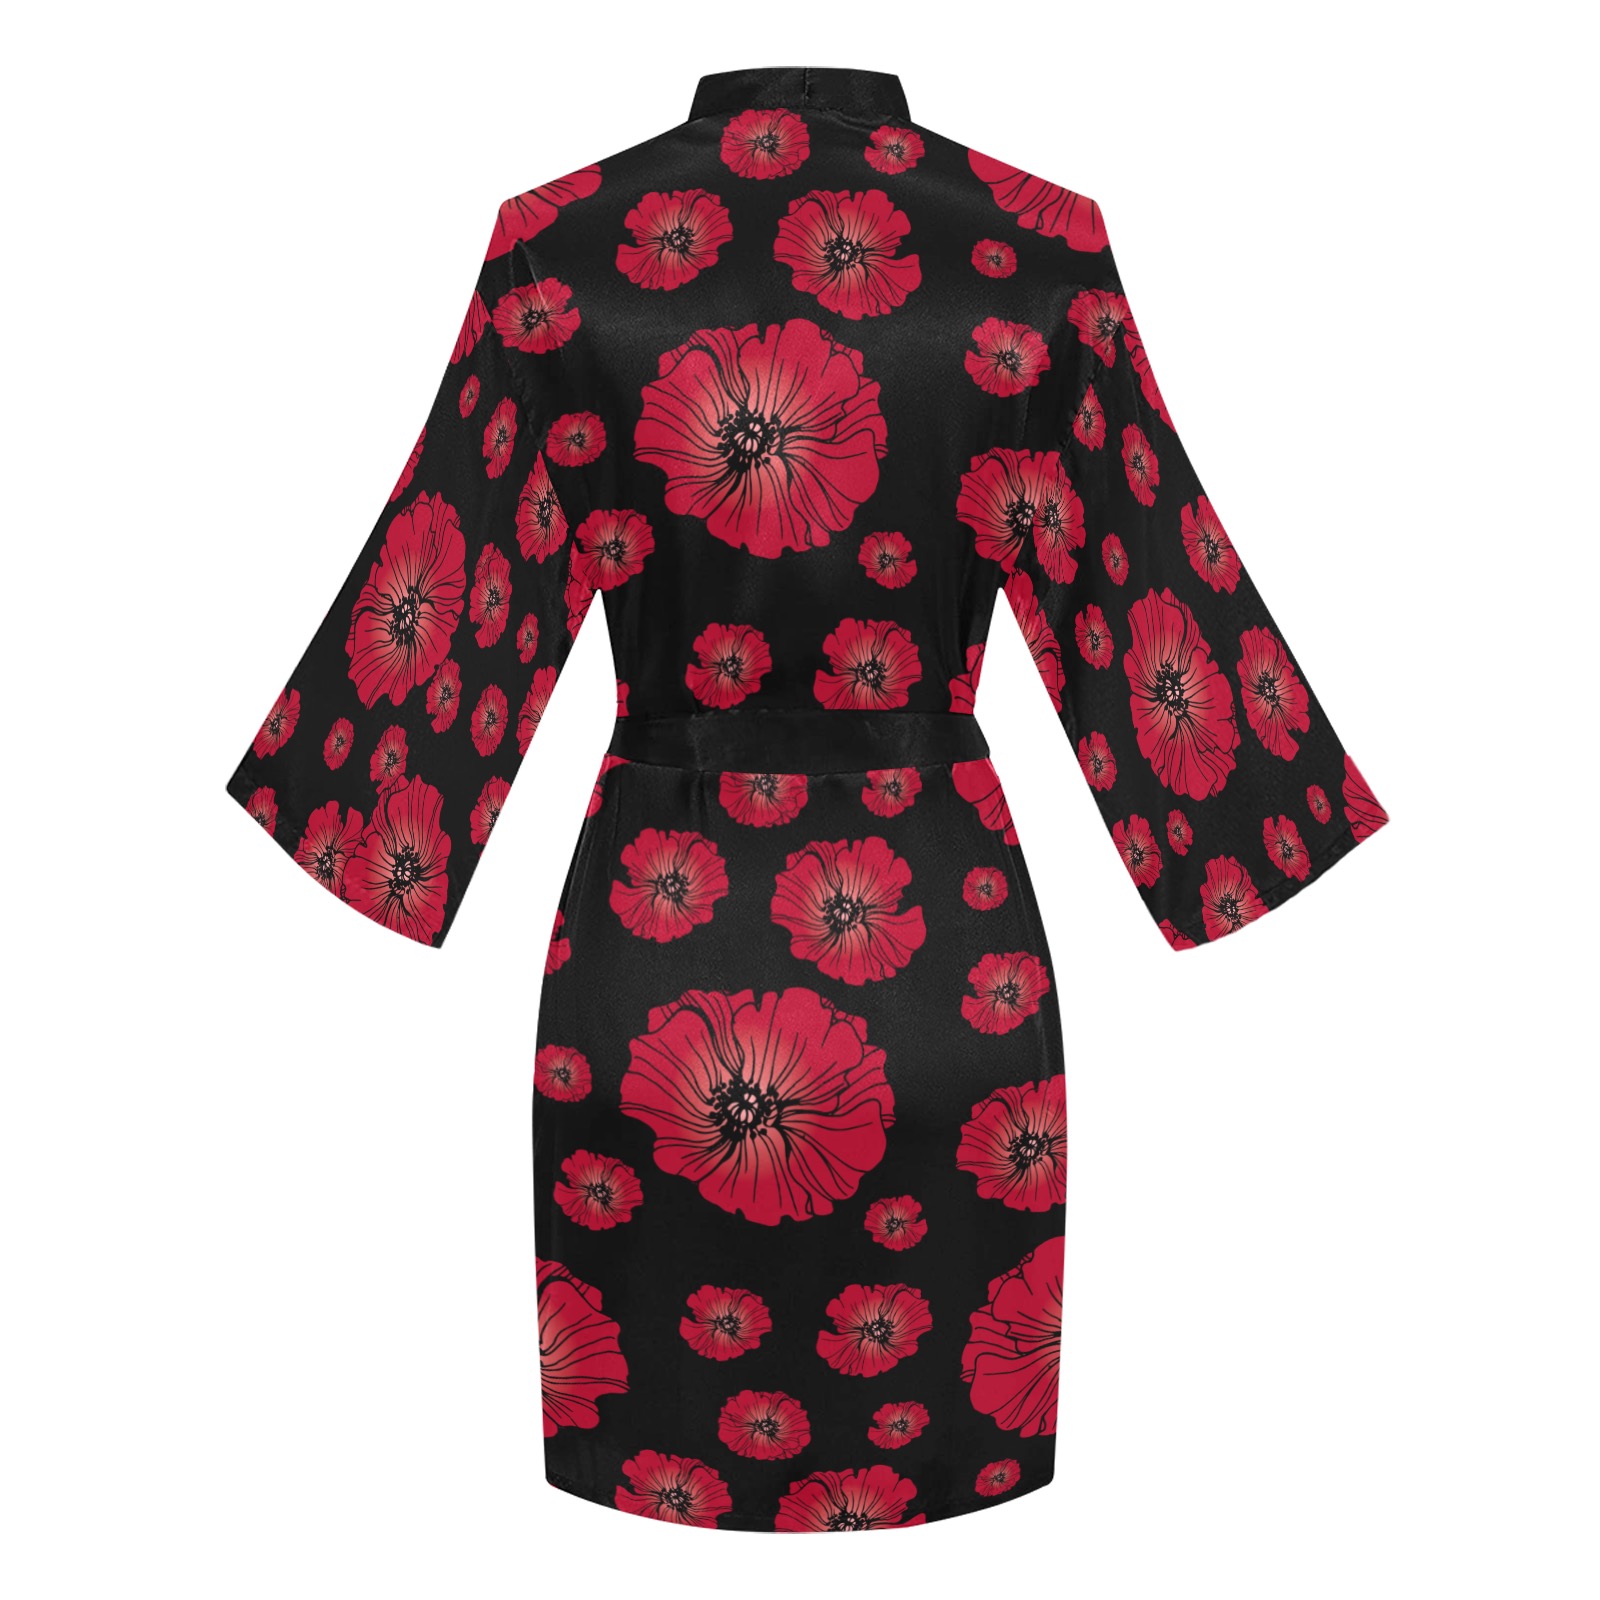 Ô Scarlet Poppies Scatter on Black Long Sleeve Kimono Robe